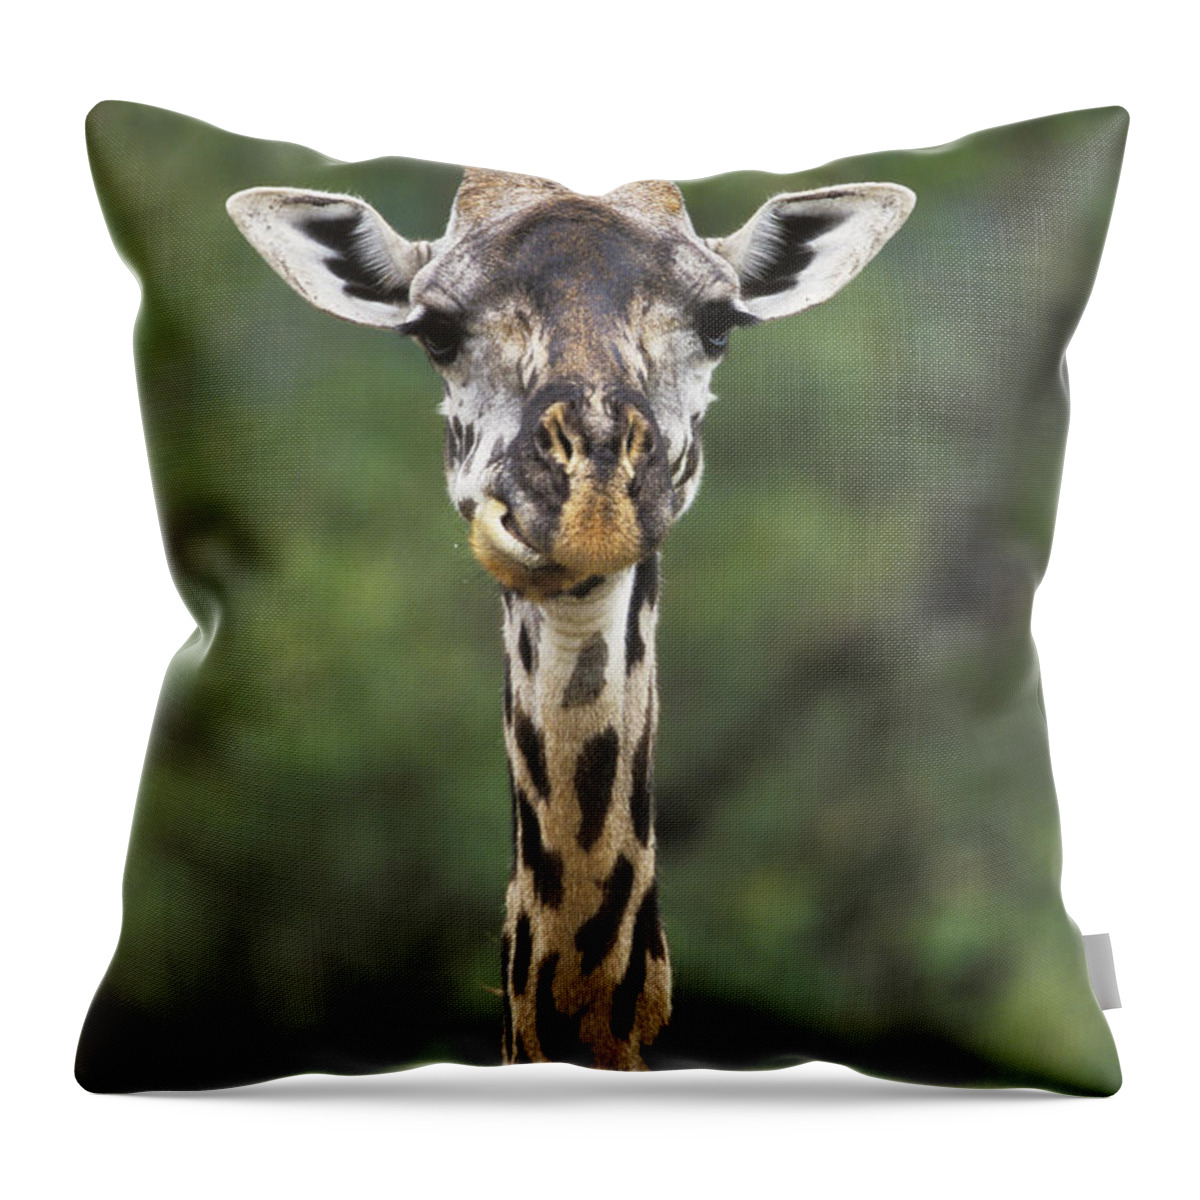 00198689 Throw Pillow featuring the photograph Masai Giraffe Serengeti by Konrad Wothe